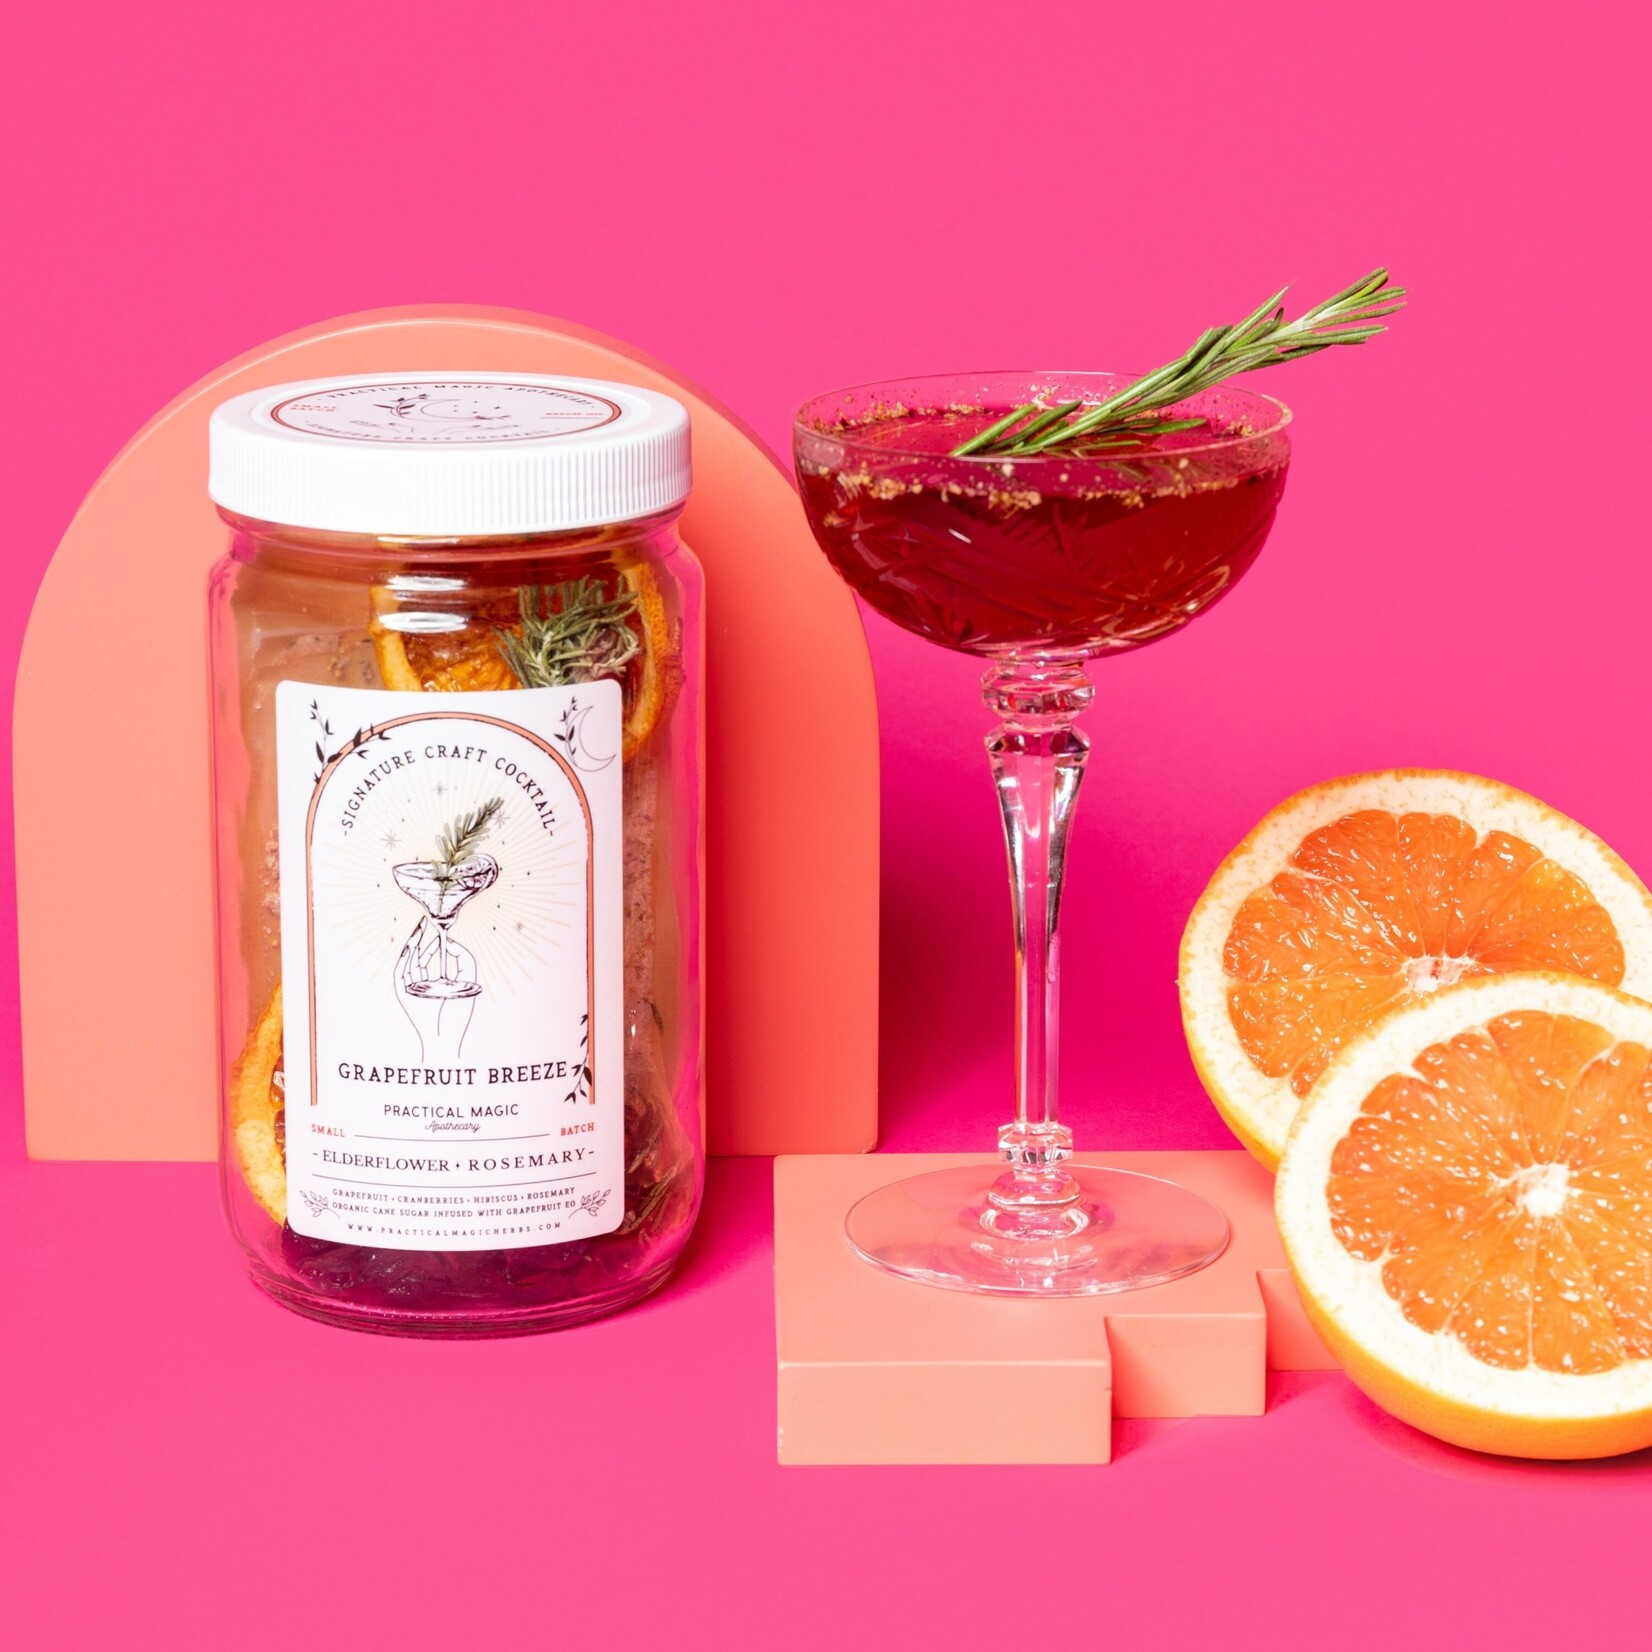 Practical Magic Apothecary Grapefruit Breeze Elderflower & Rosemary Craft Cocktail Small